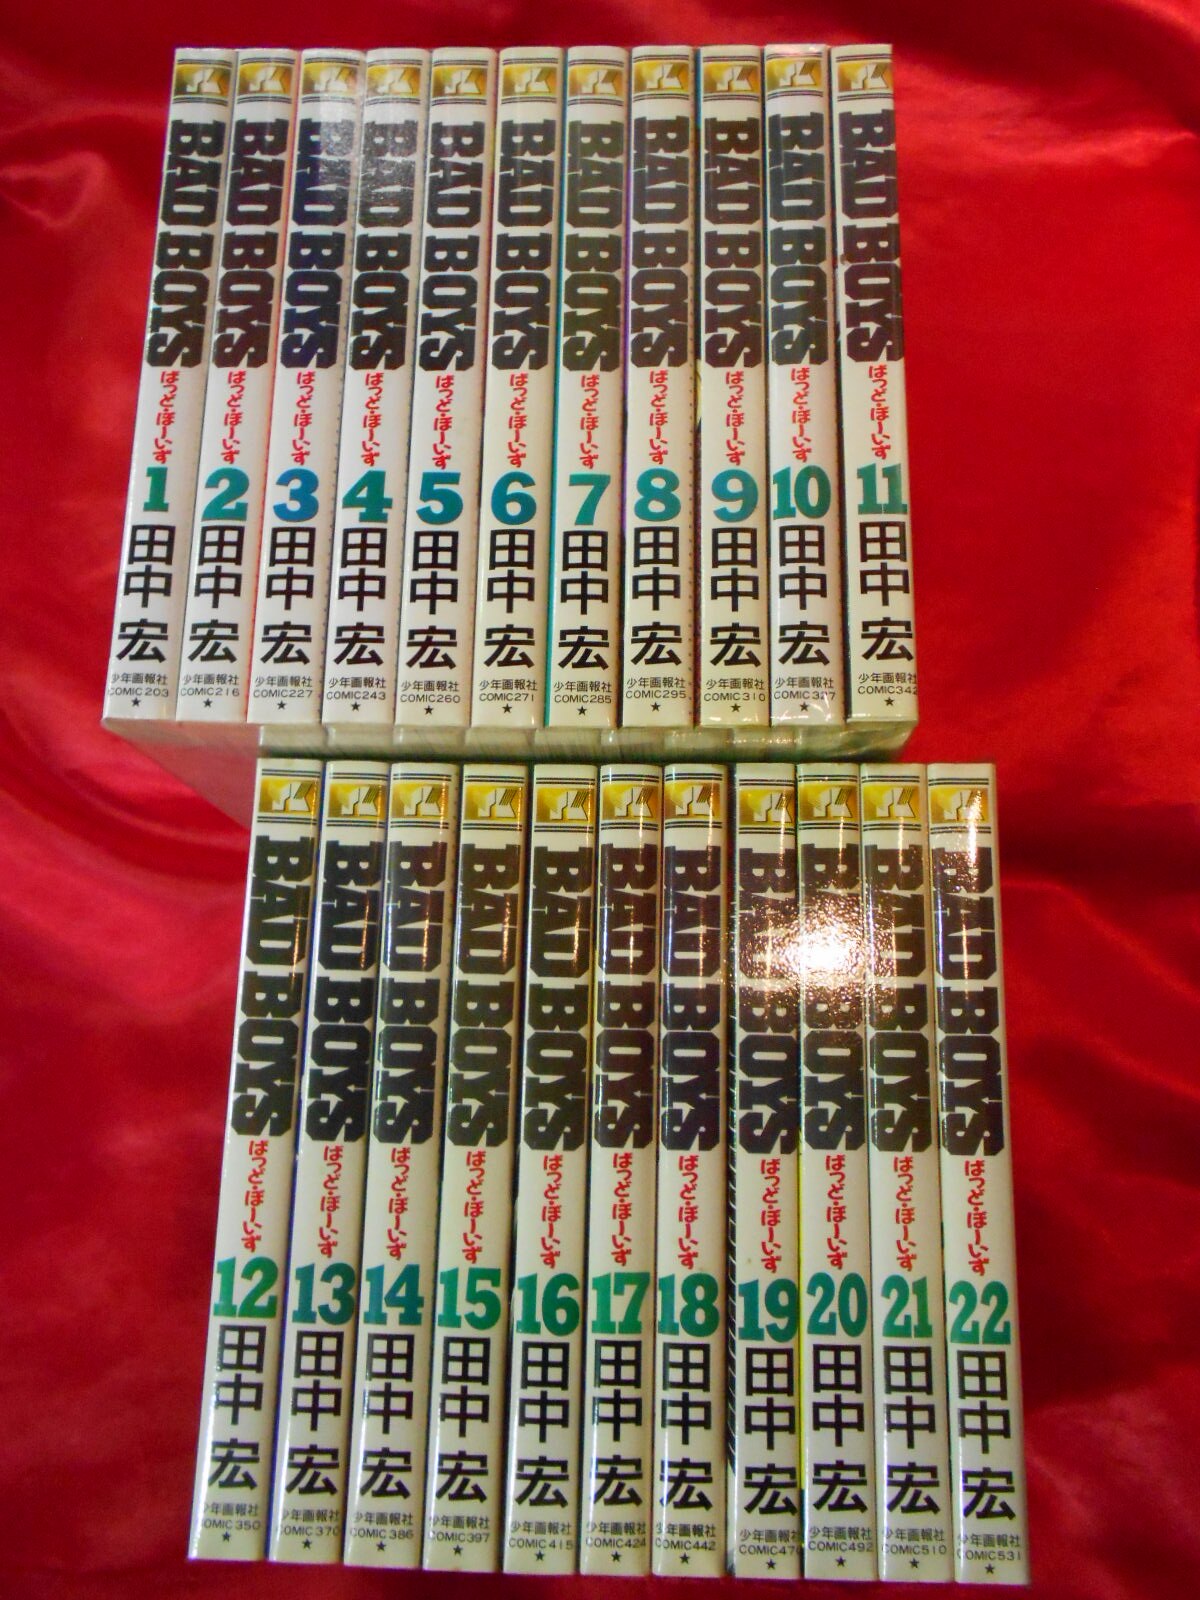 Shonen Gahosha Young King Comics Hiroshi Tanaka Badboys Complete 22 Volume Set Mandarake Online Shop